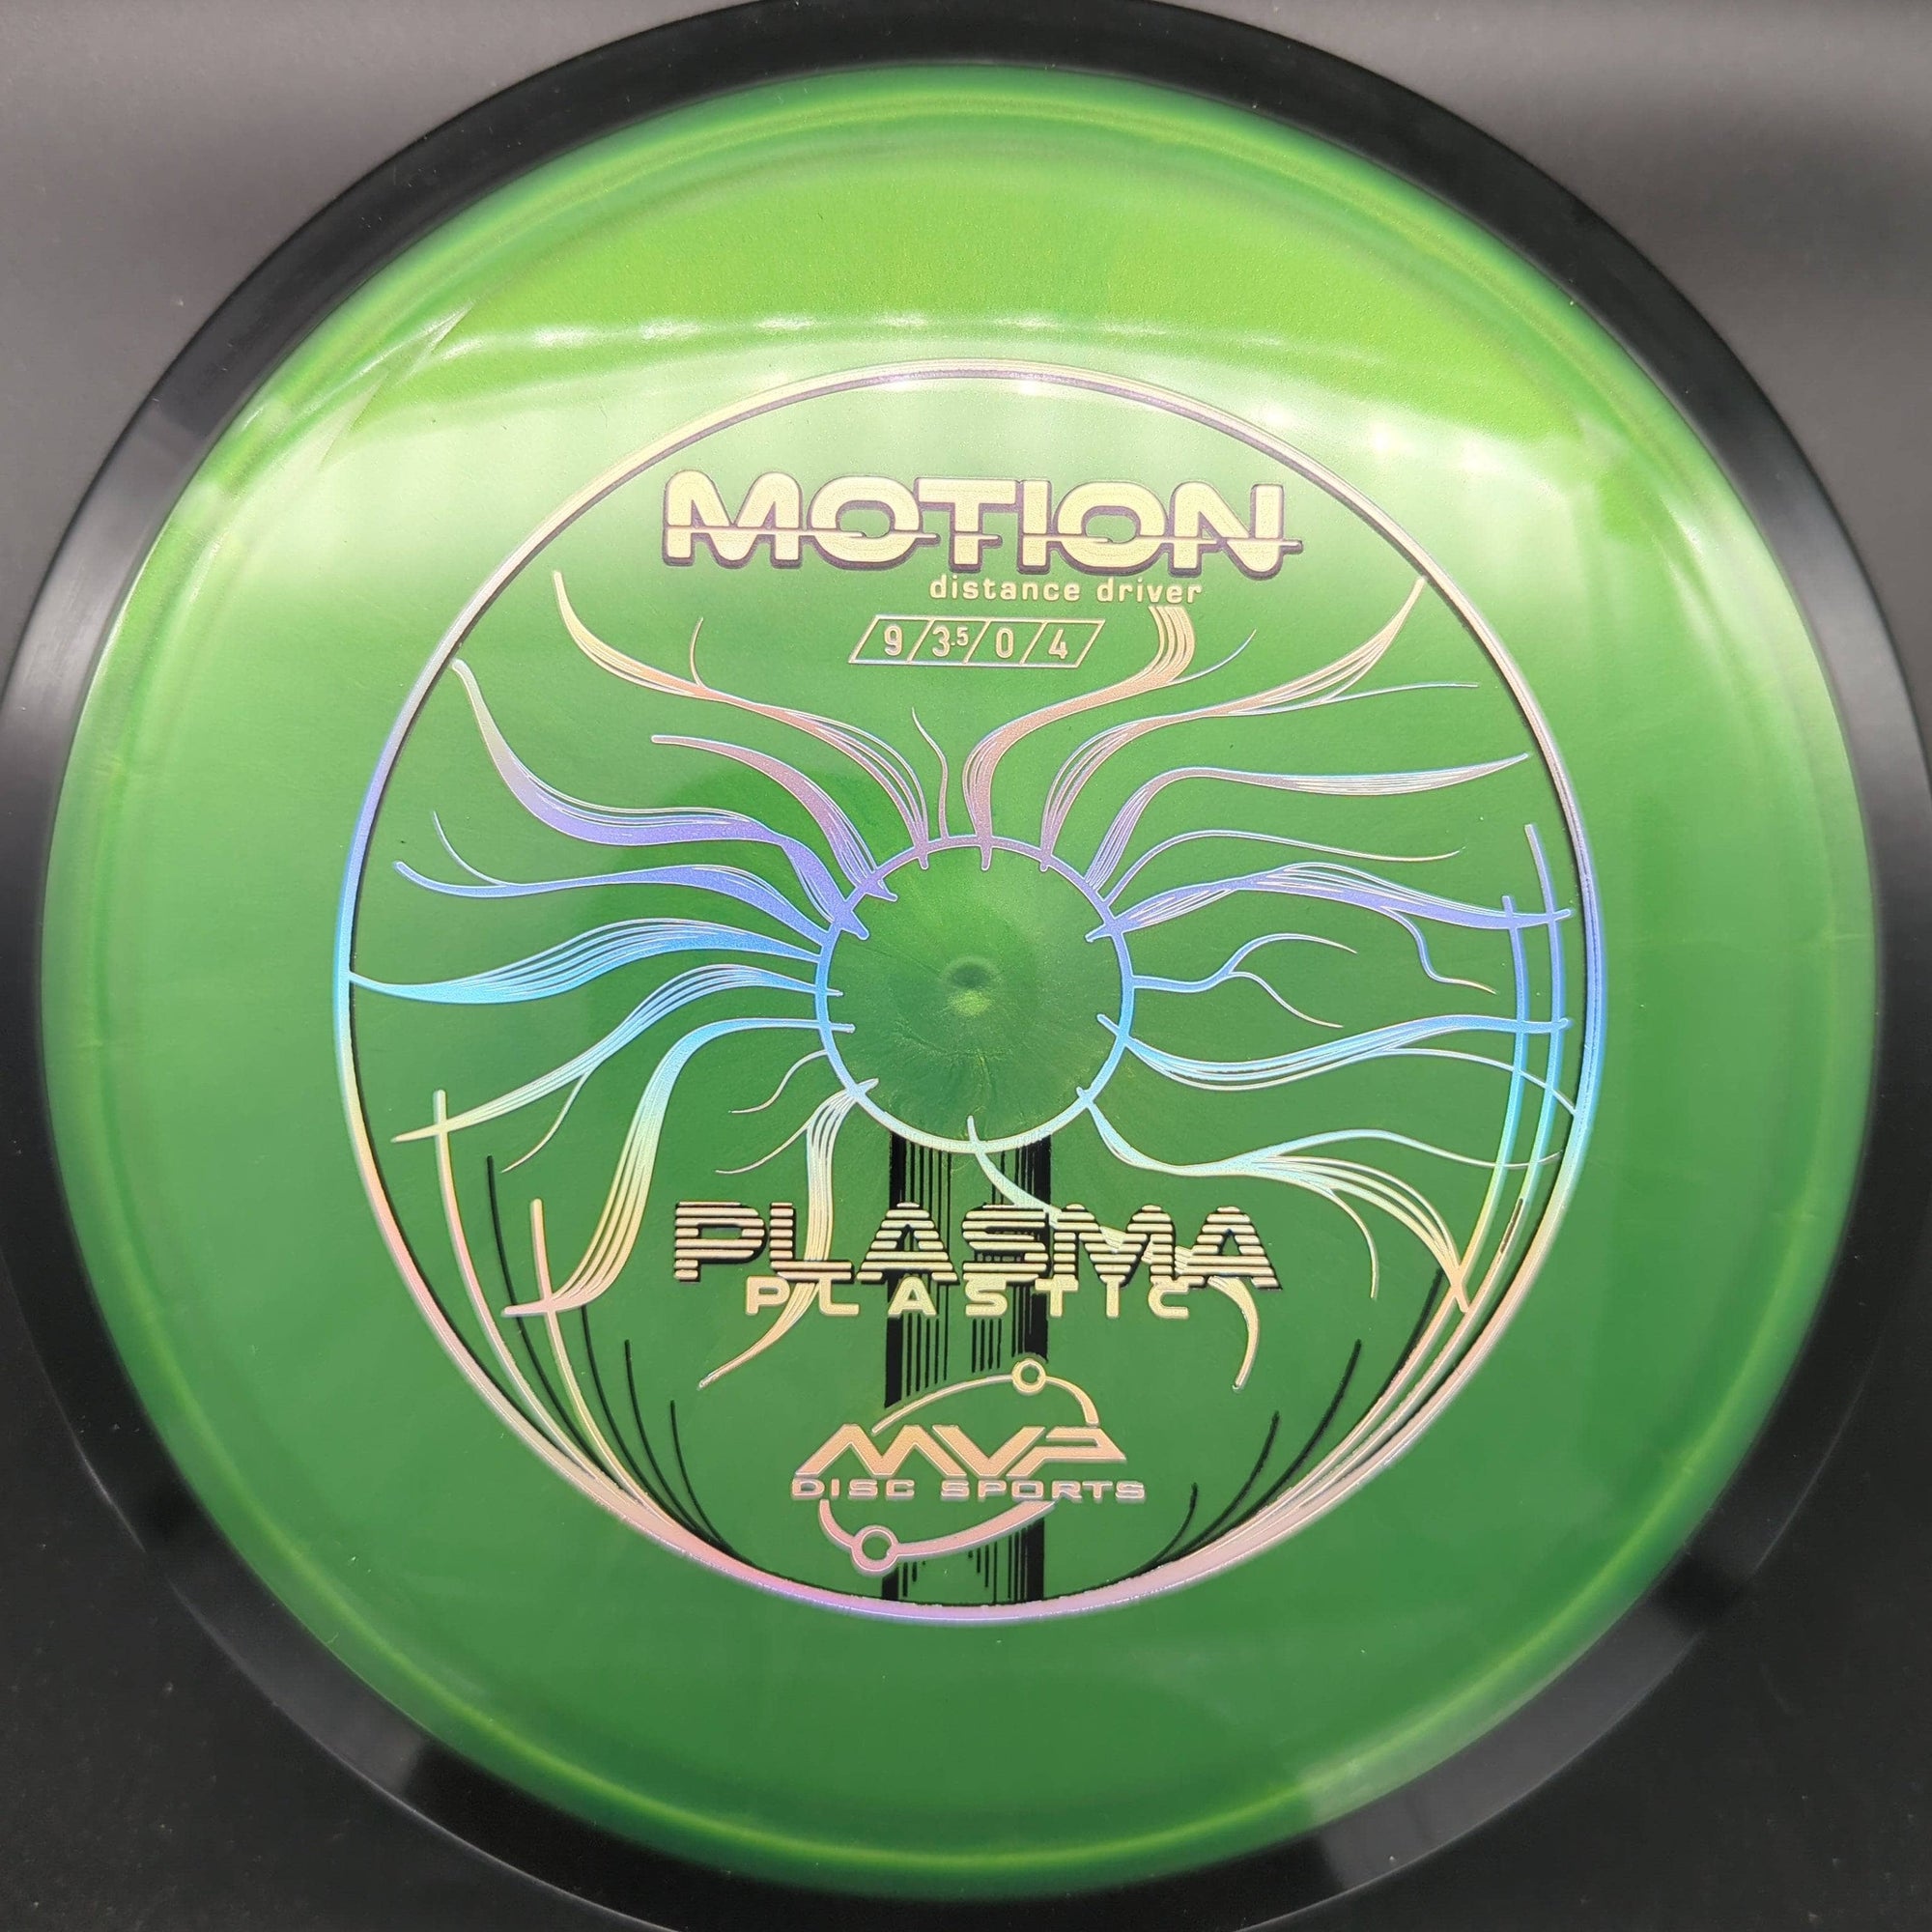 MVP Distance Driver Plasma Motion